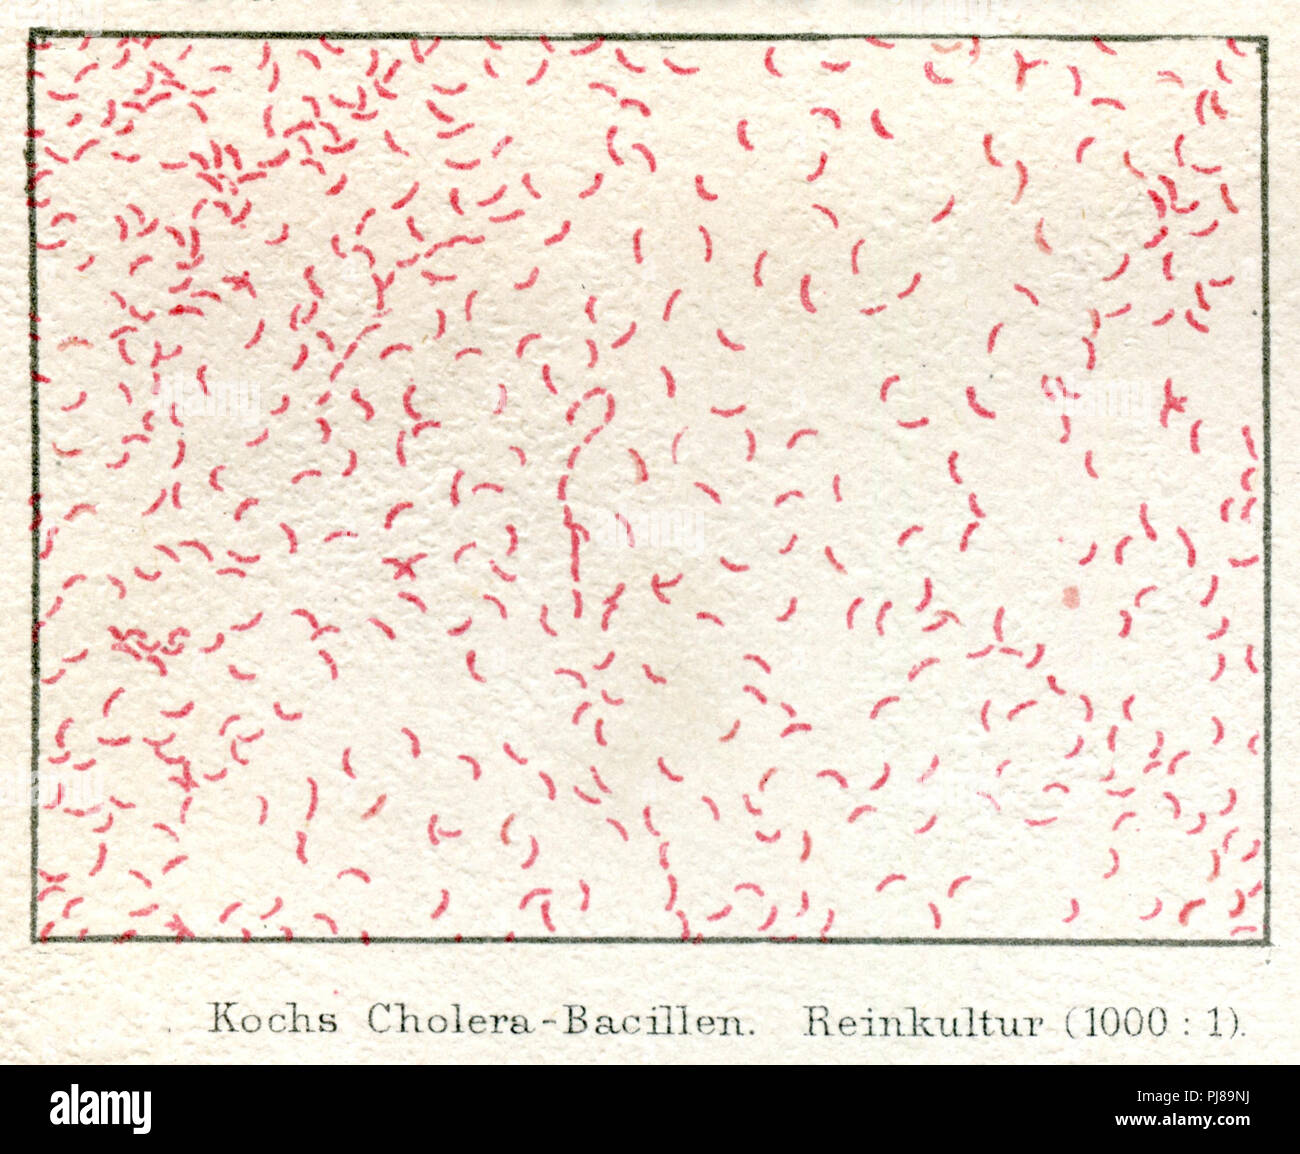 Cook cholera bacteria under the microscope (1000: 1).,   1885 Stock Photo